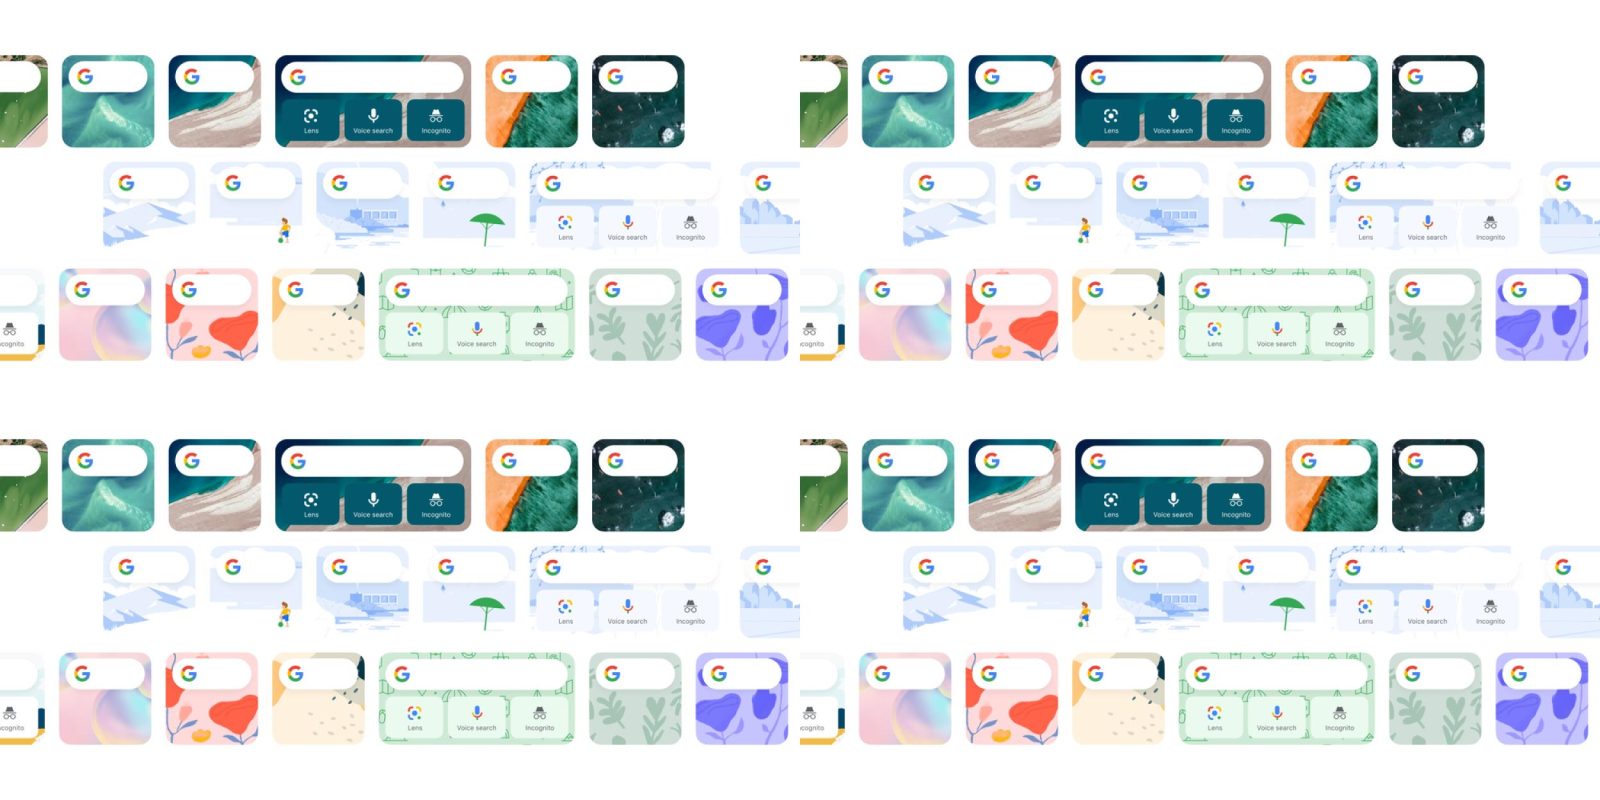 Google iPhone widget theme